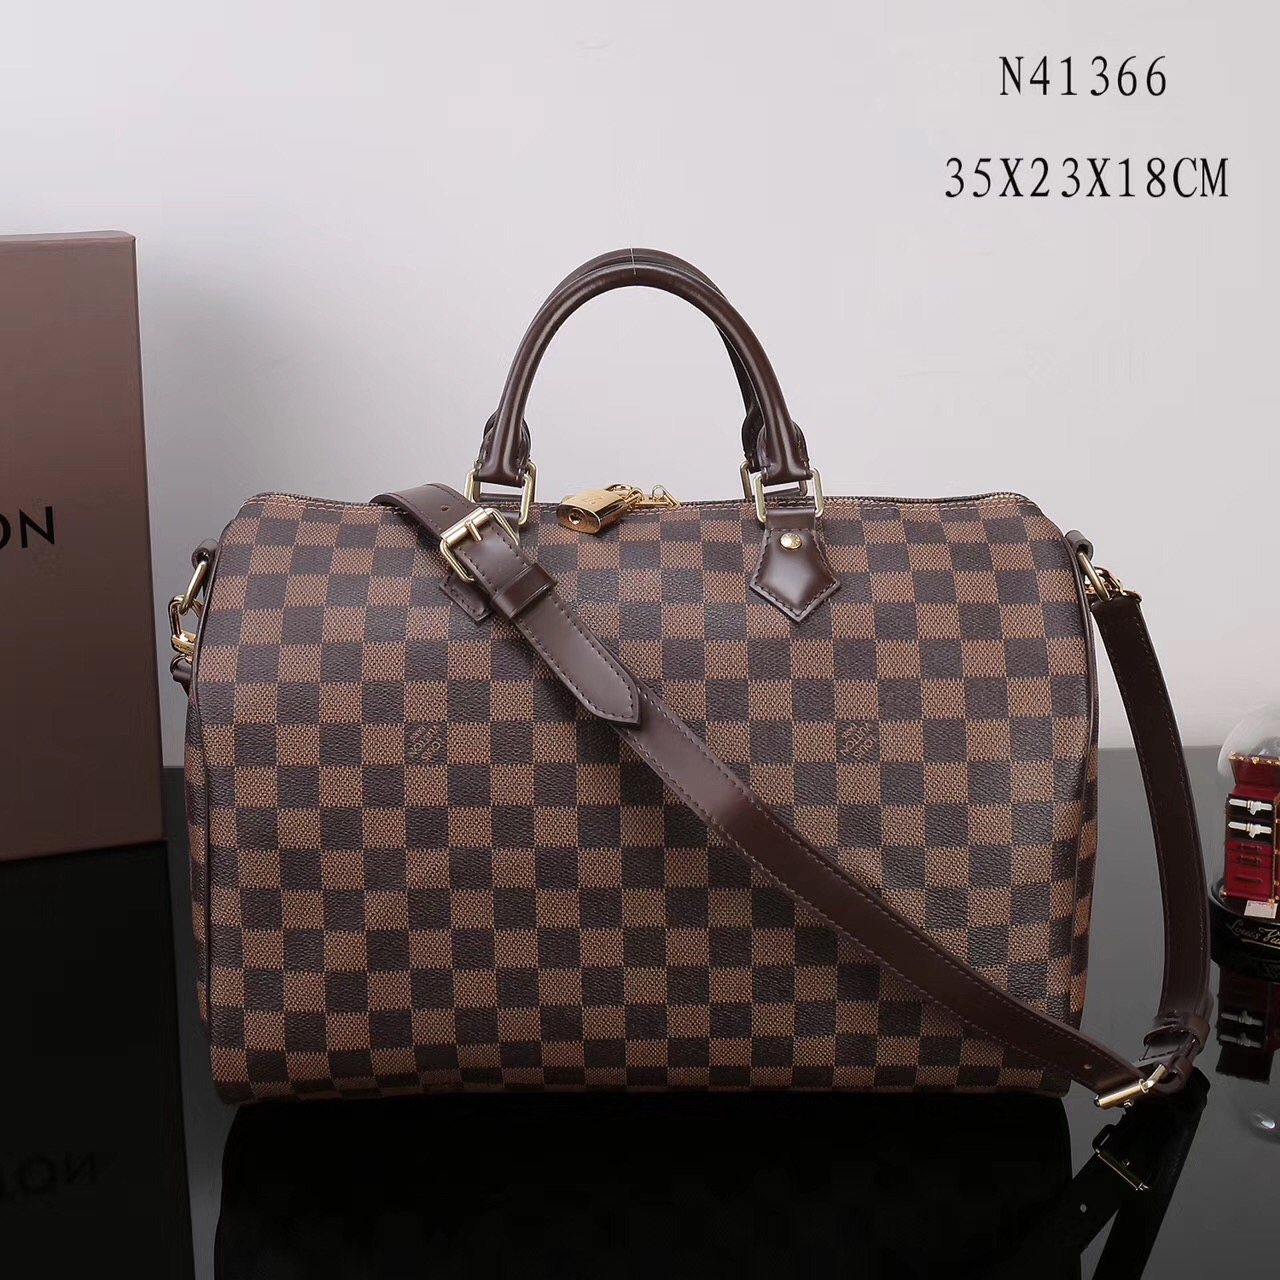 LV Louis Vuitton Speedy 35 Damier bags N41366 Handbags Brown [LV1150] - $242.00 : Luxury